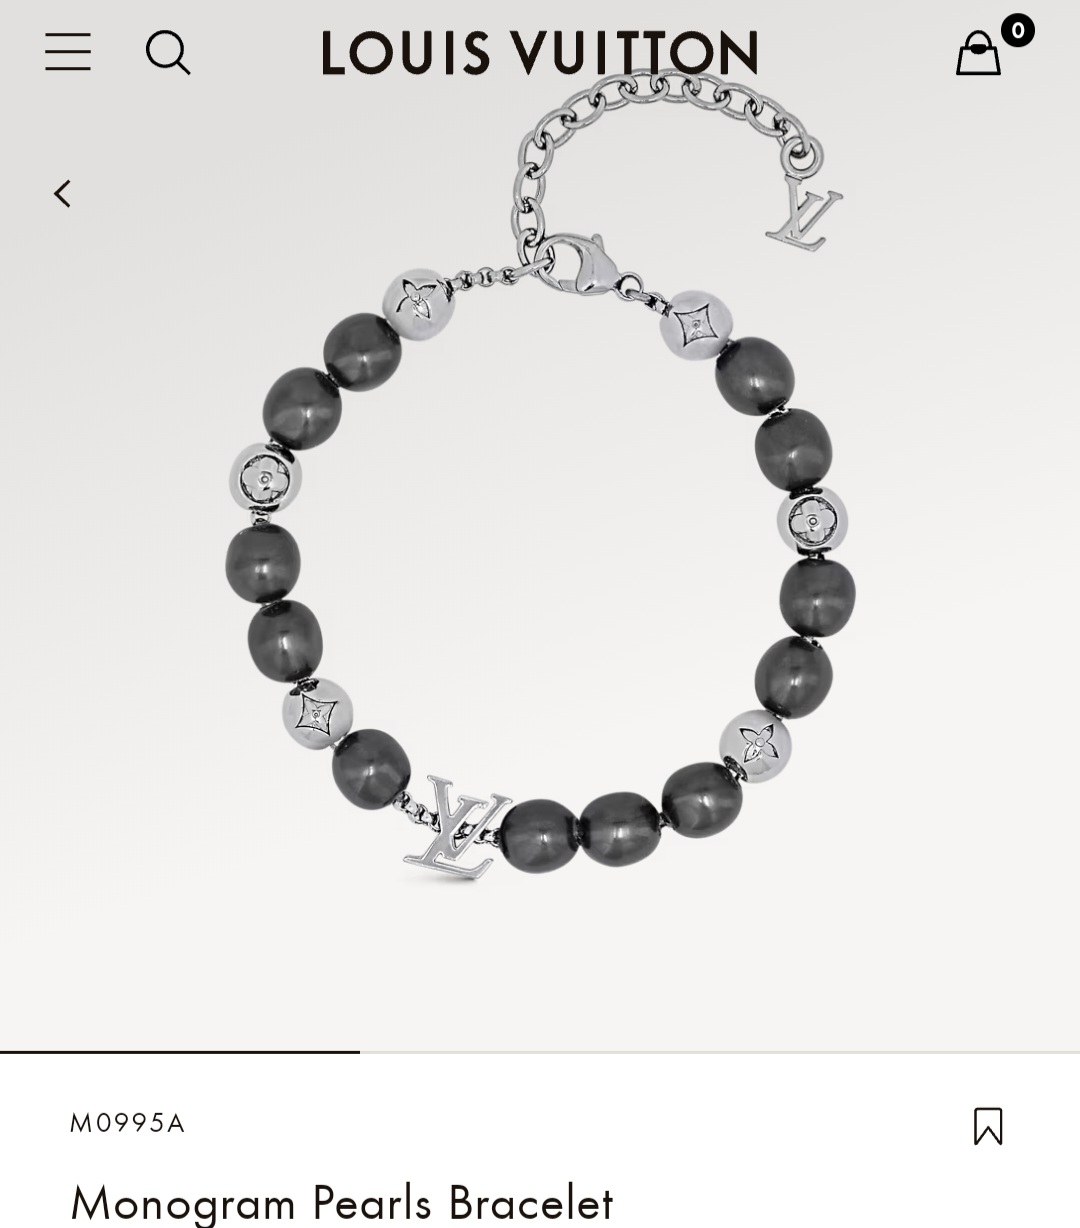 LV Monogram Pearls bracelet